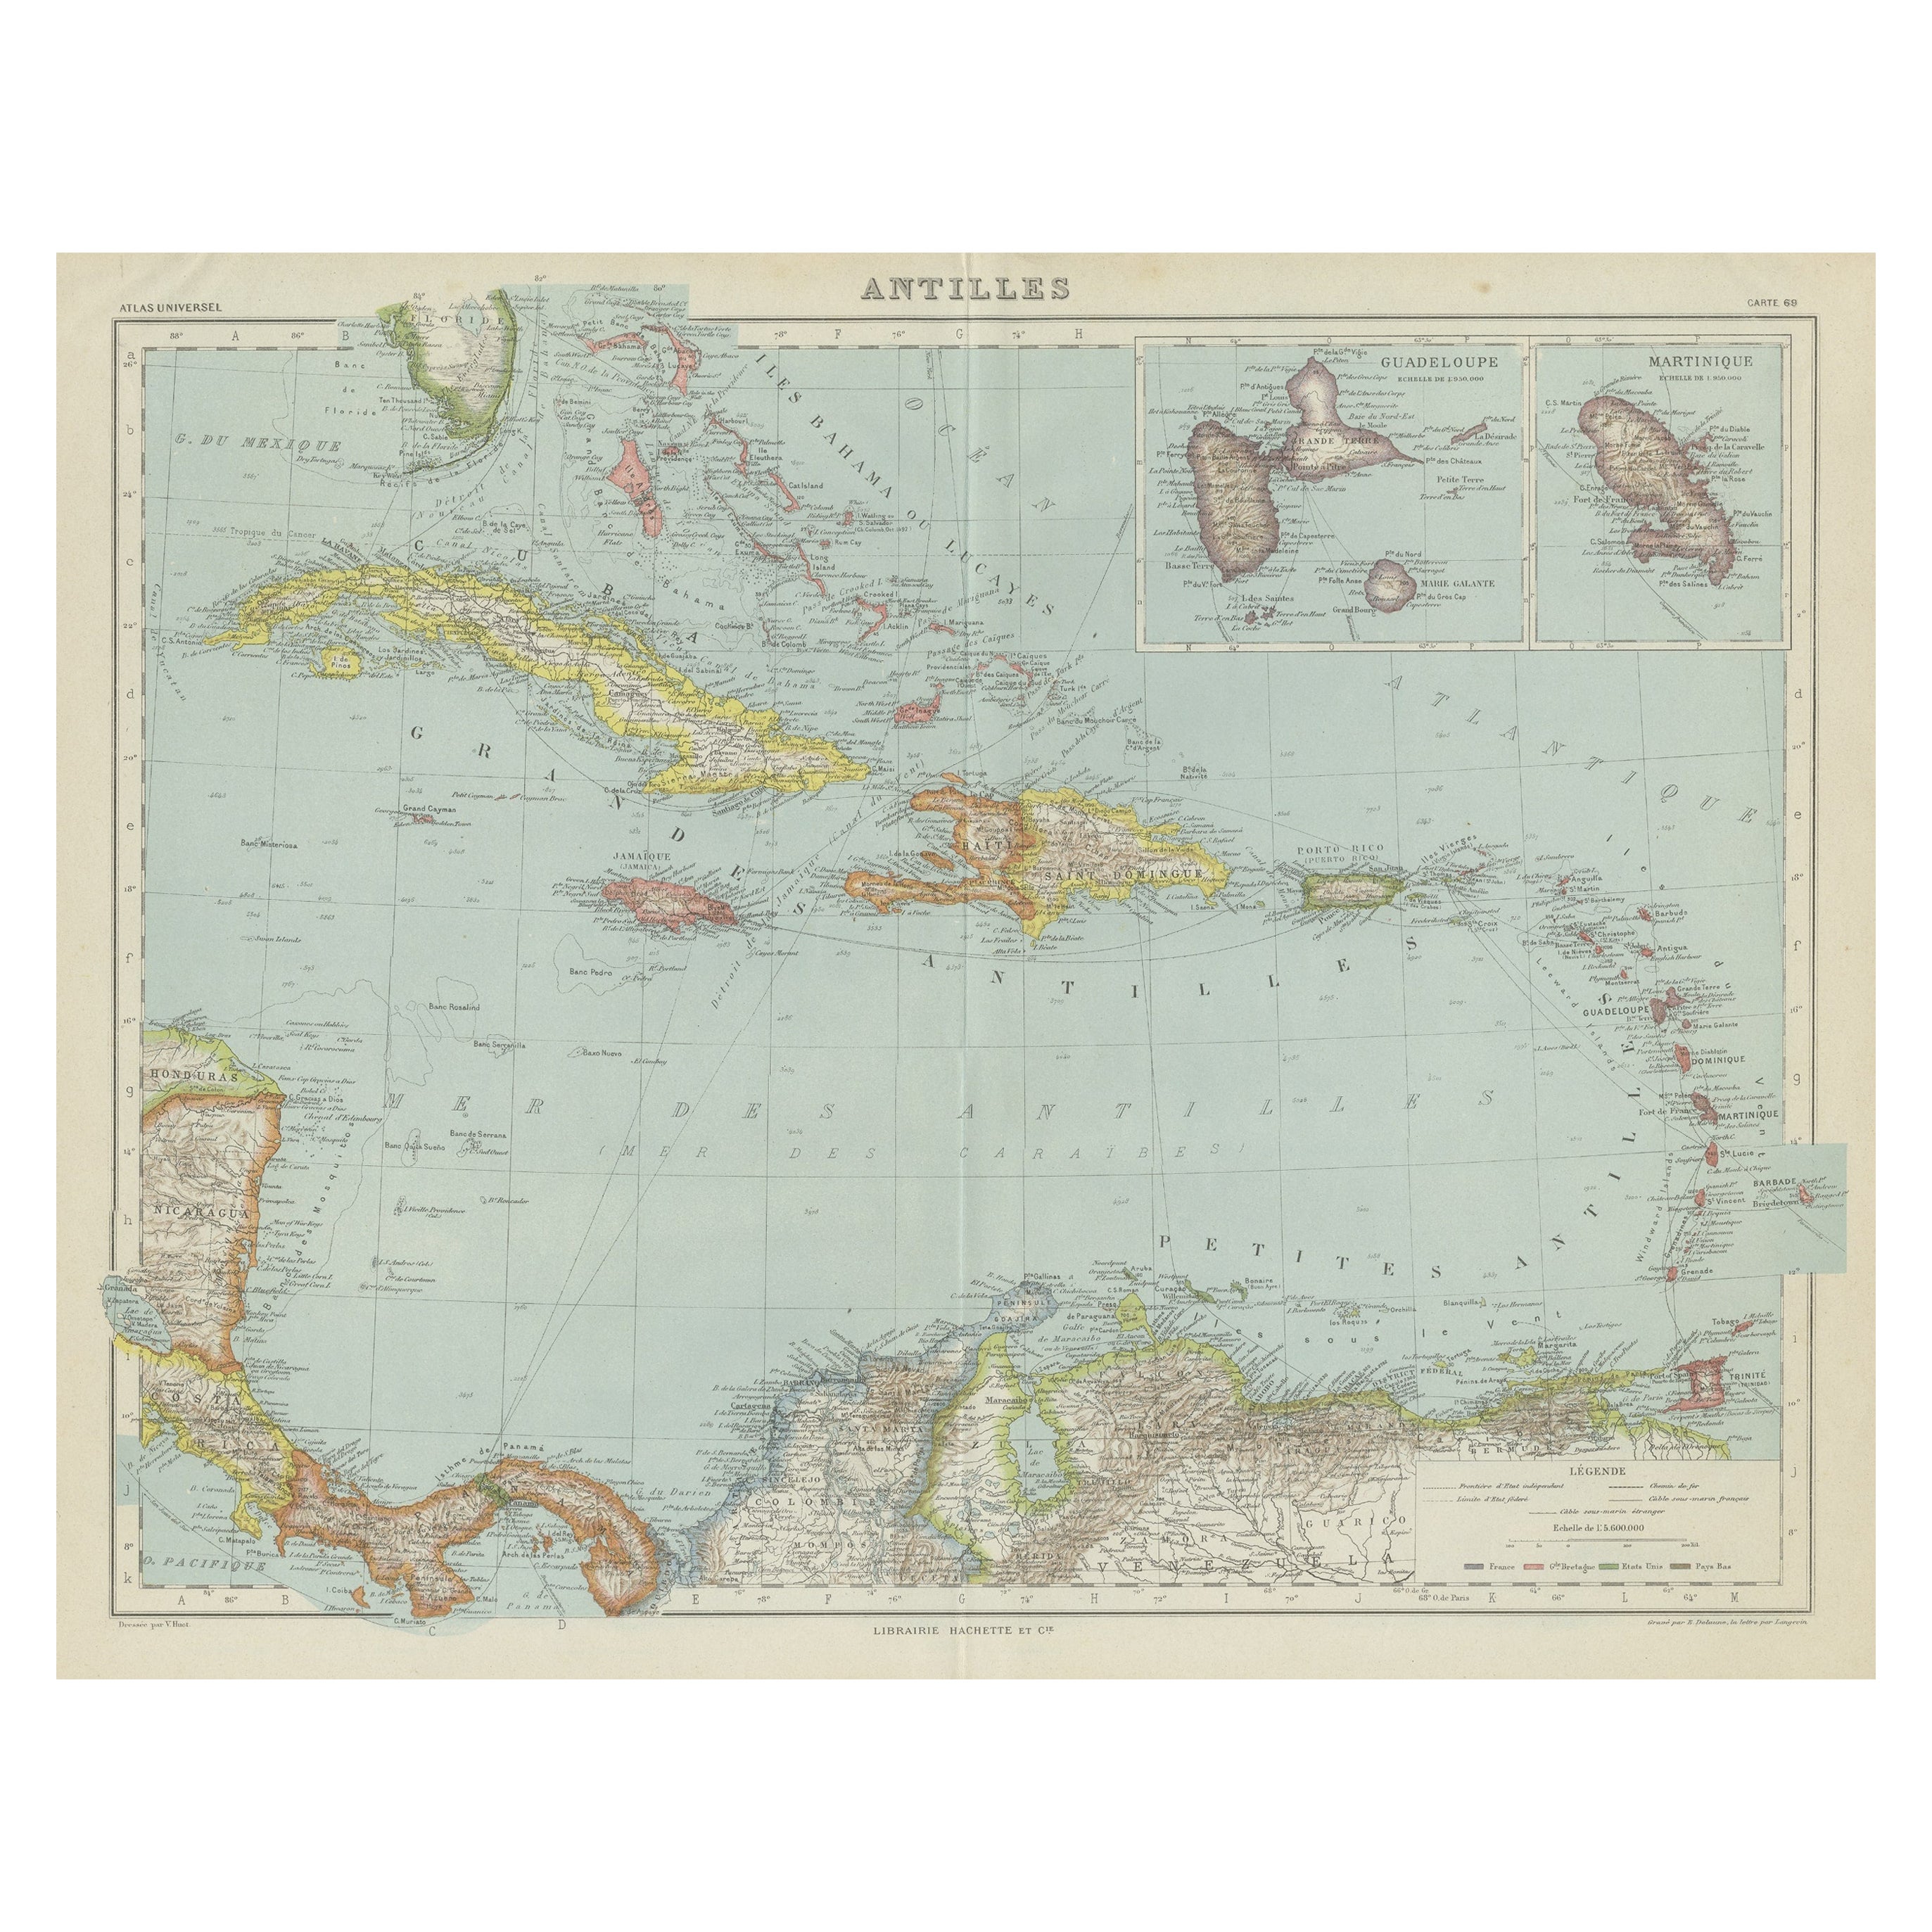 Kartenkarte der Großen Antilles und Lesser Antilles im Vintage-Stil